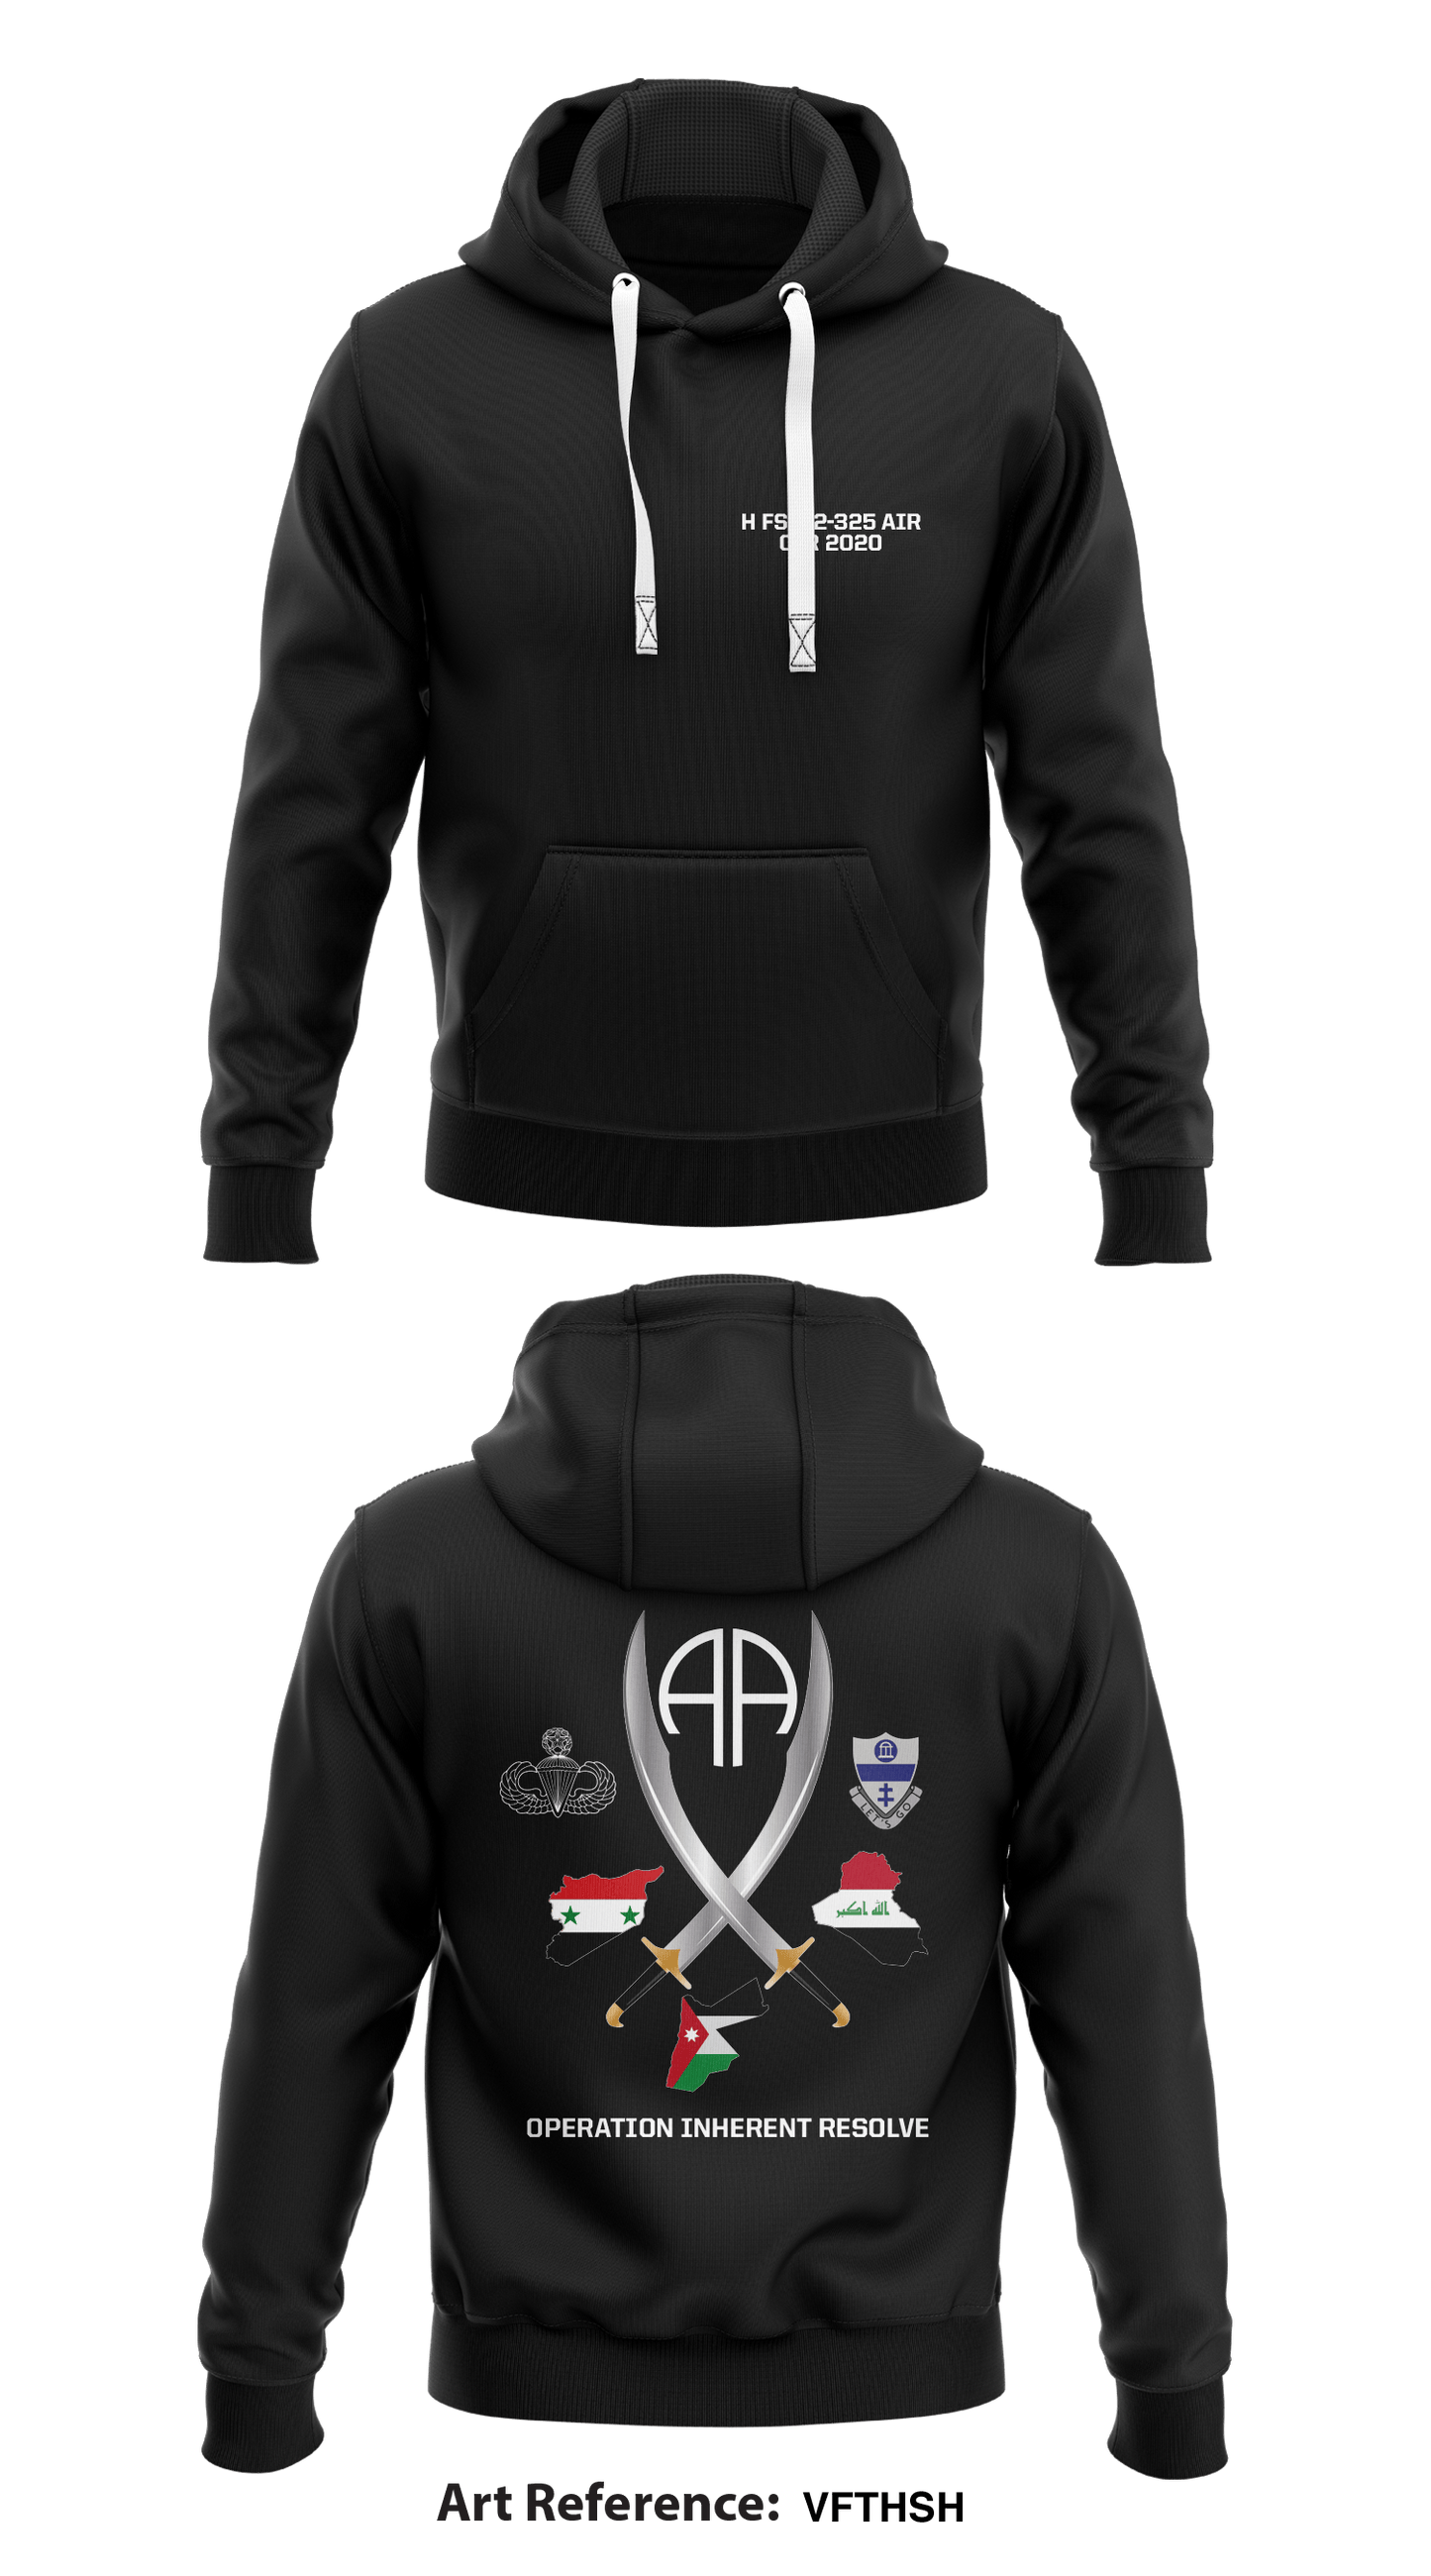 H FSC, 2-325 AIR Store 1  Core Men's Hooded Performance Sweatshirt - vFtHSH